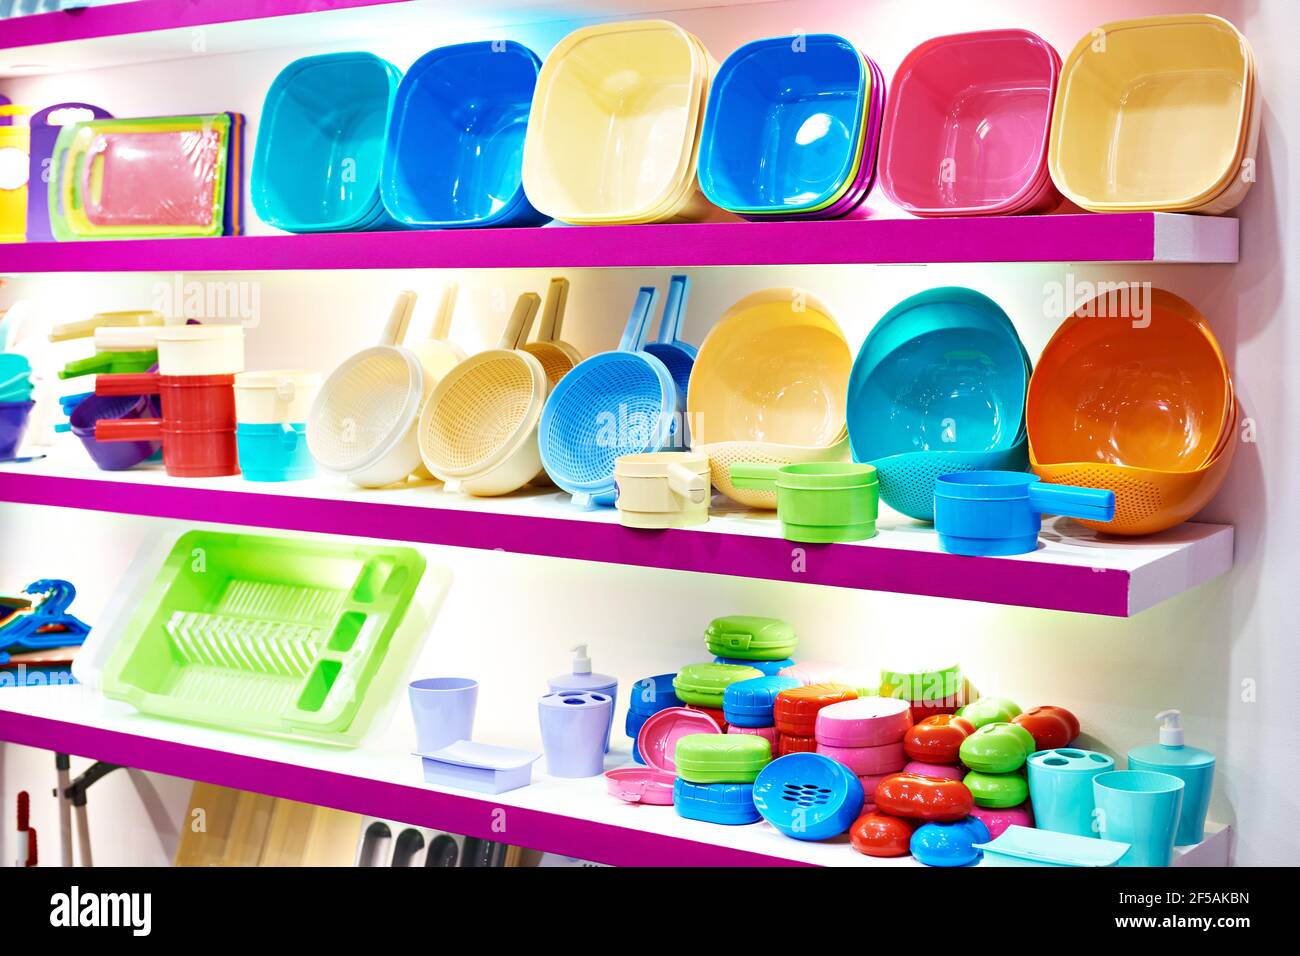 https://c8.alamy.com/comp/2F5AKBN/plastic-kitchenware-in-the-household-goods-store-2F5AKBN.jpg